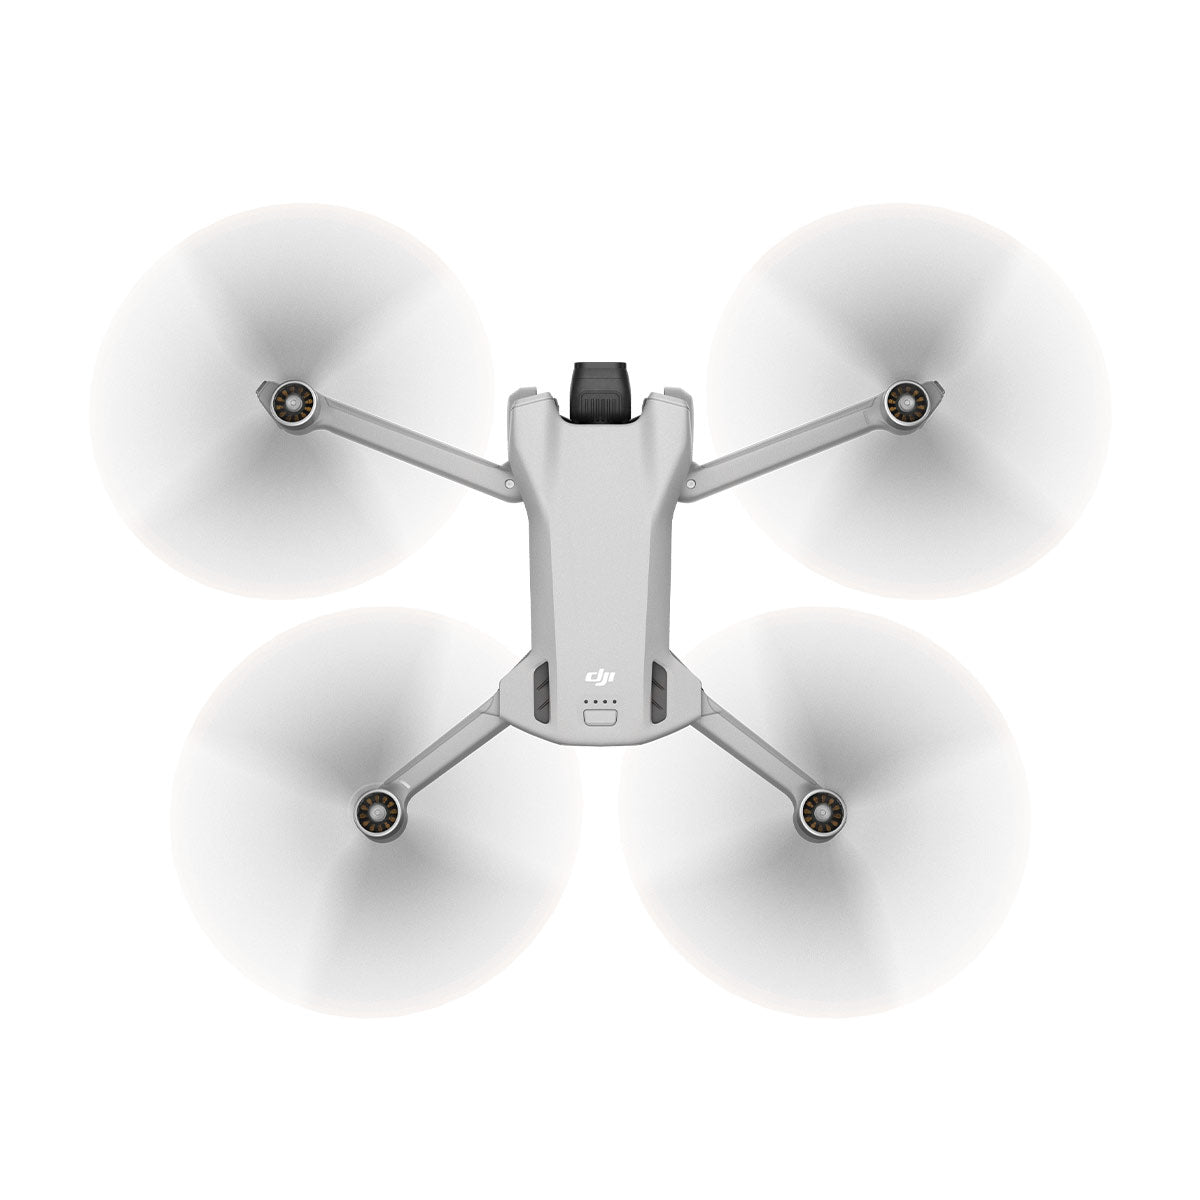 DJI Mini 3 Drone with RC Remote Controller